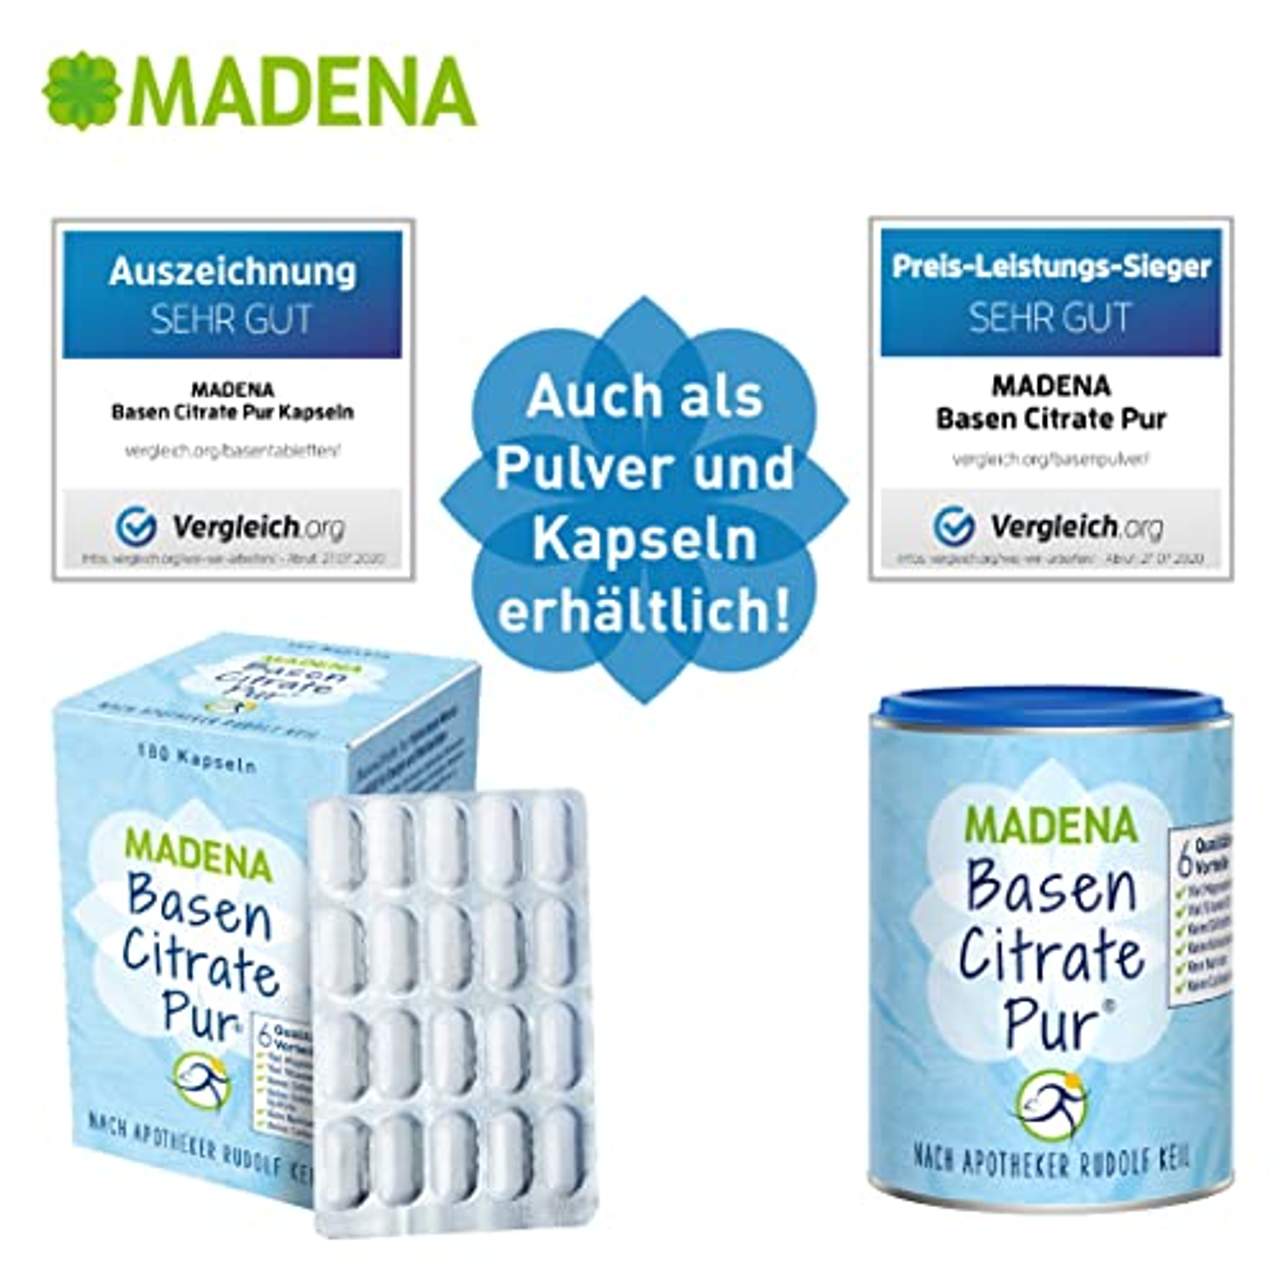 Madena BasenCitrate Pur Sachets nach Apotheker Rudolf Keil